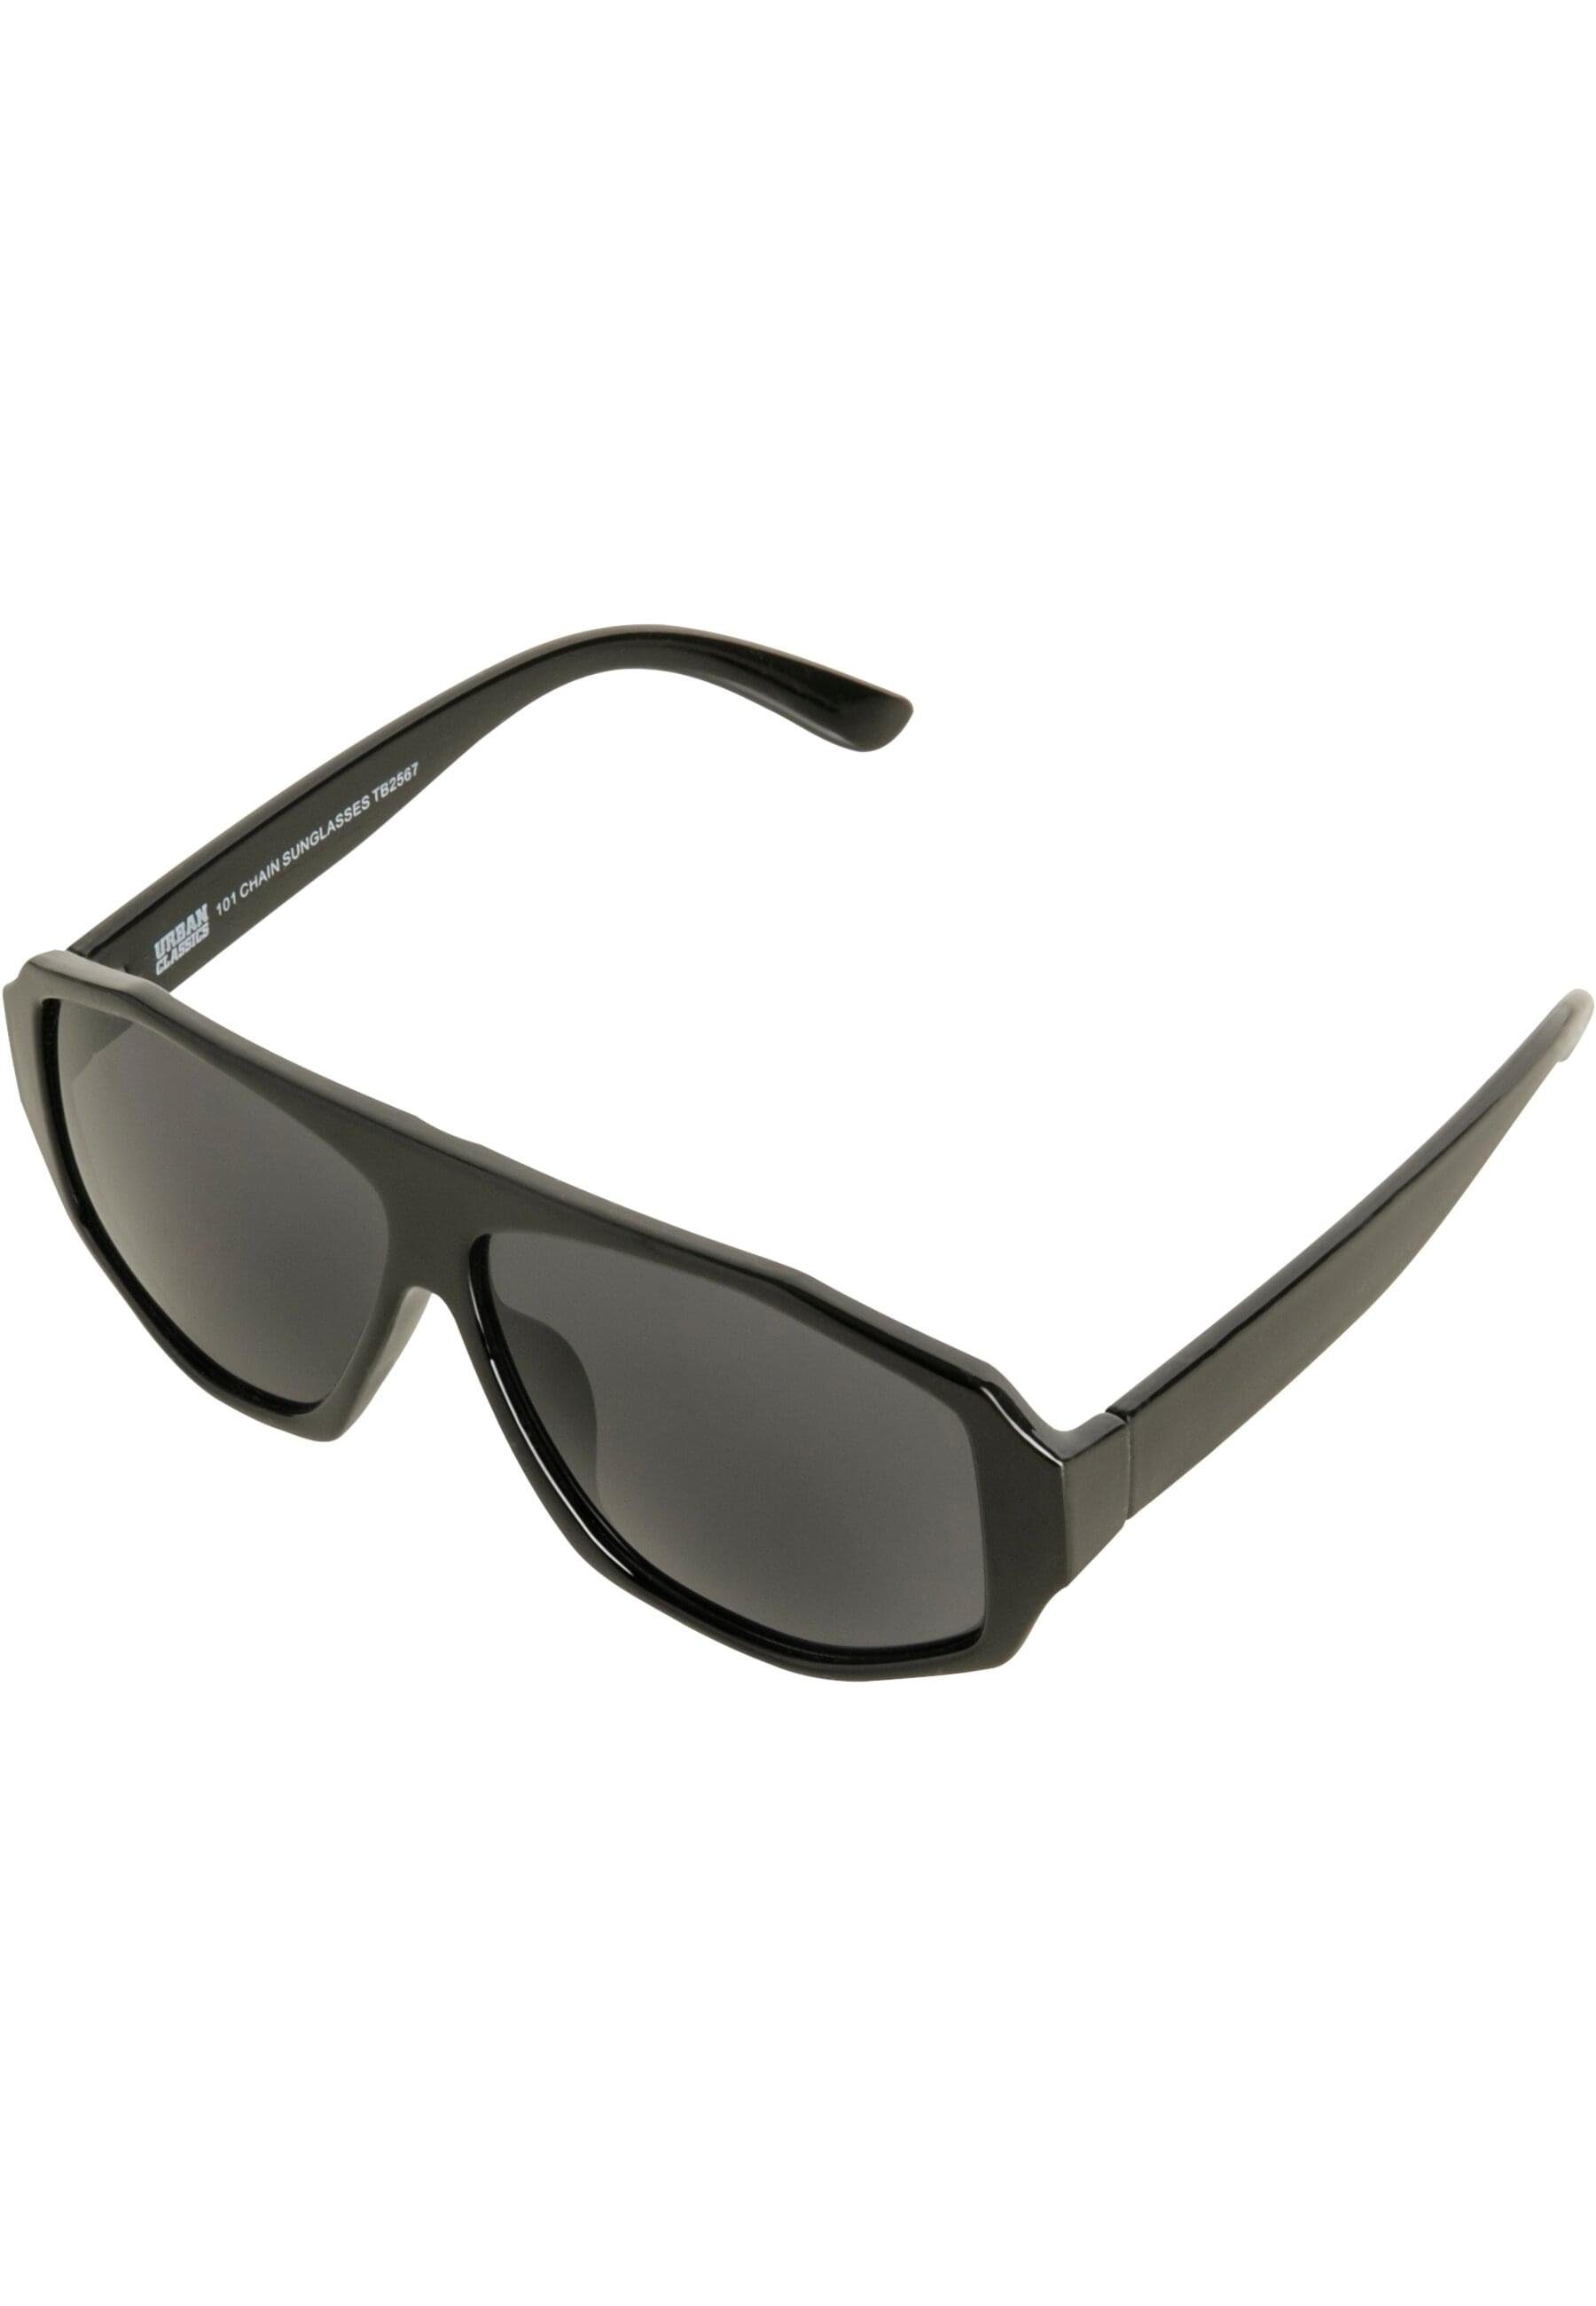 Sonnenbrille CLASSICS URBAN 101 Chain Chain Sunglasses Unisex black/black 101 TB2567